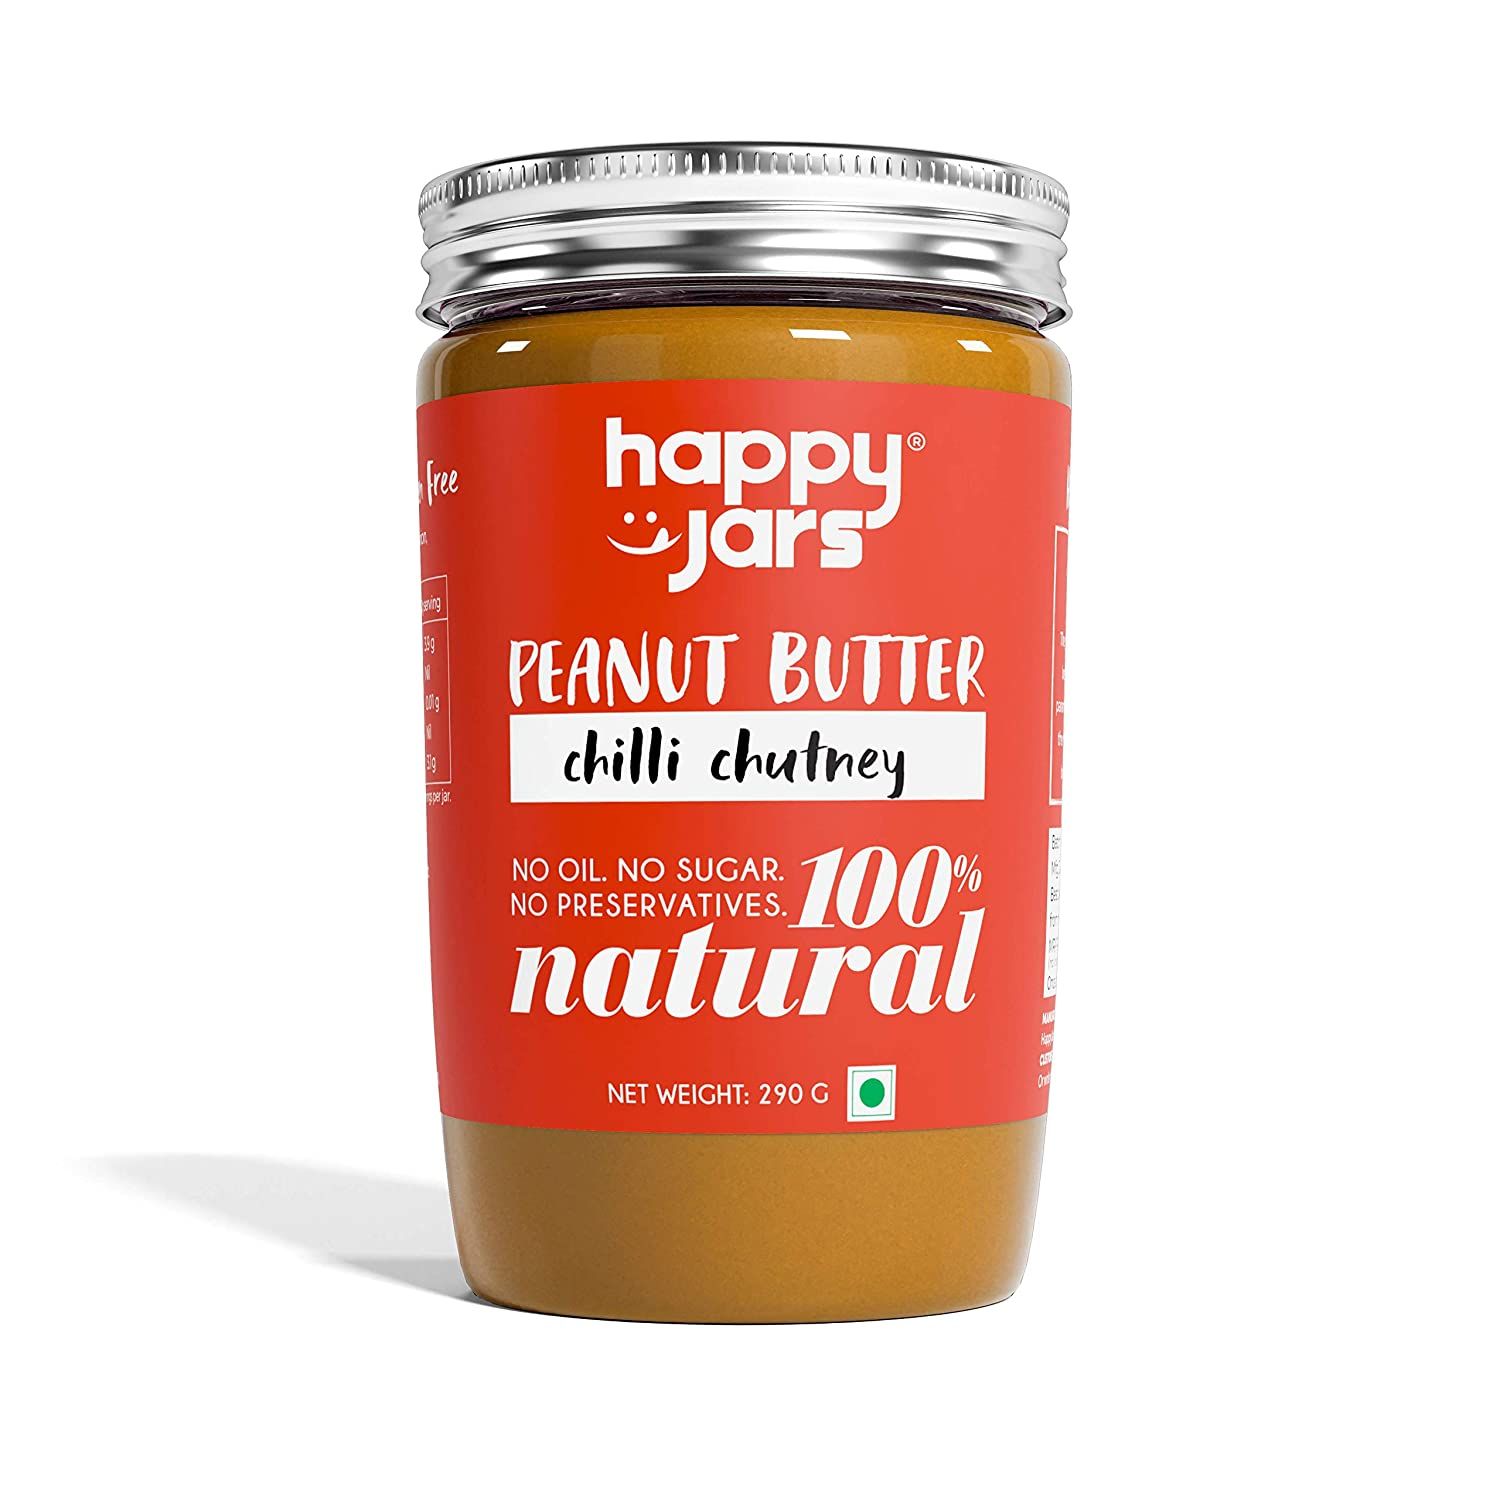 Happy Jars Chilli Chutney Peanut Butter Image